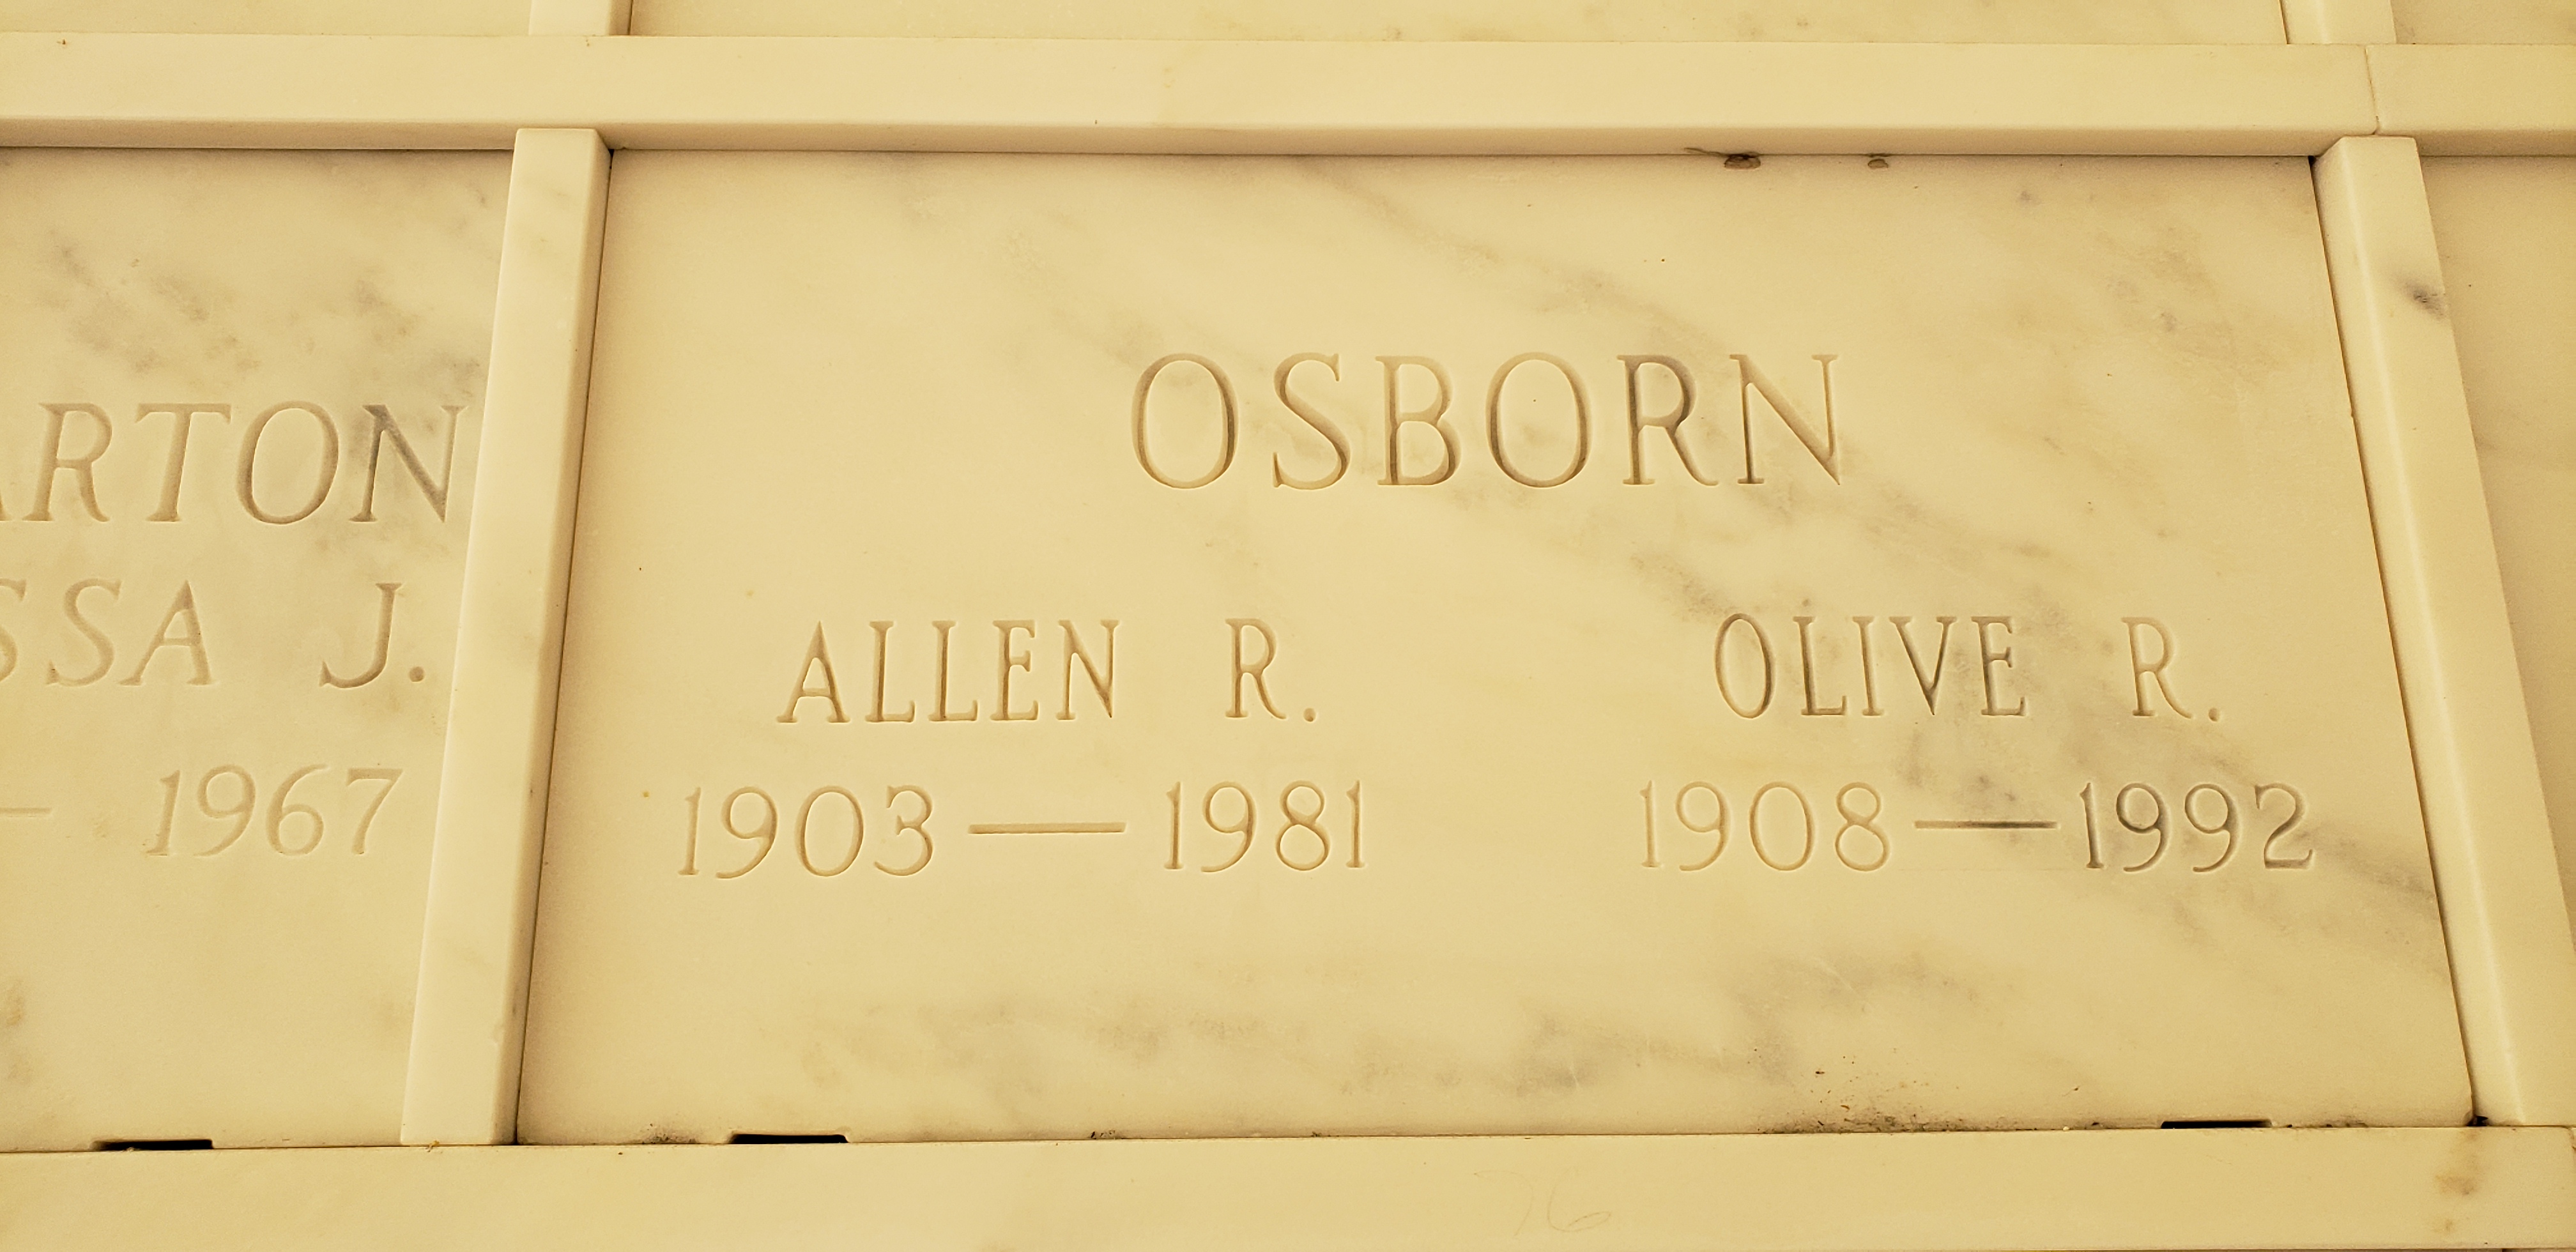 Olive R Osborn